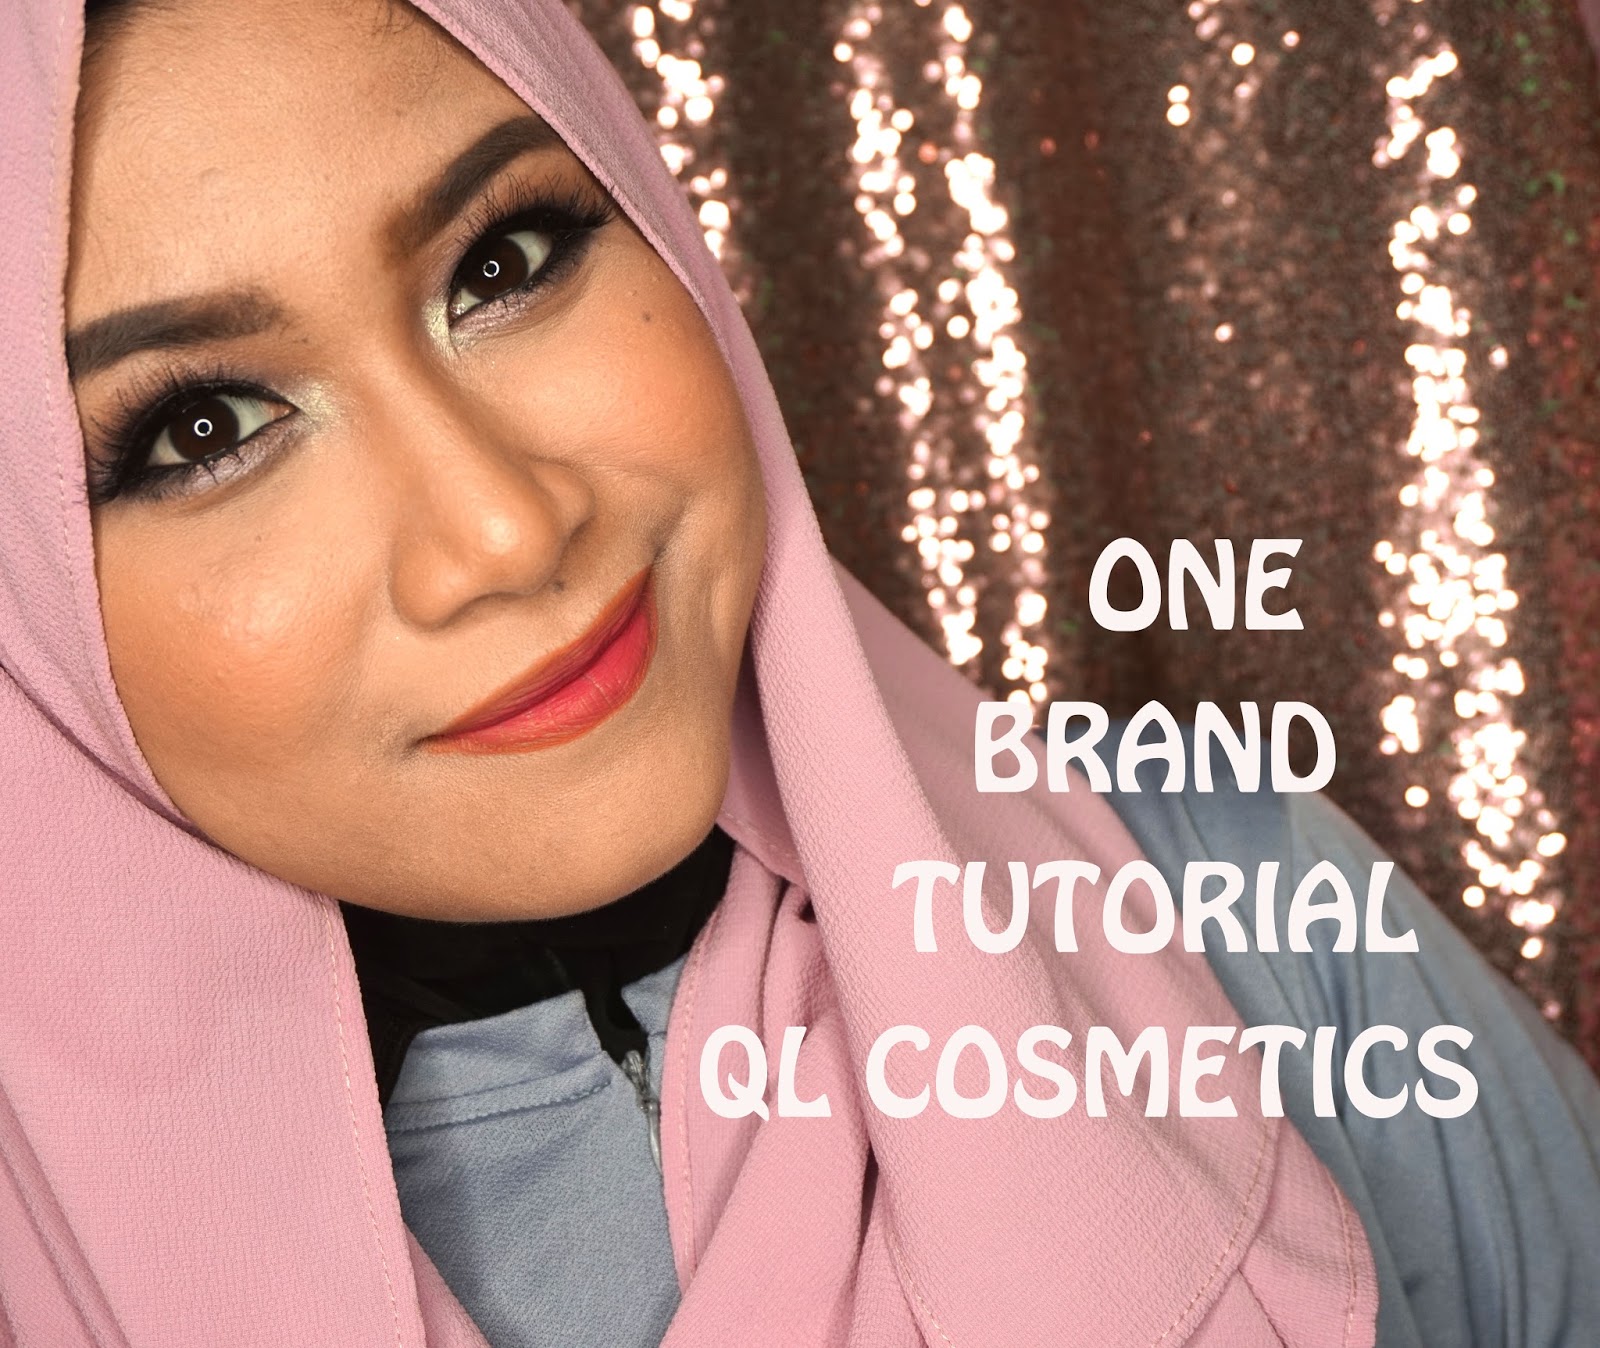 Hai Ariani Indonesian Beauty Blogger FULL FACE USING QL COSMETICS